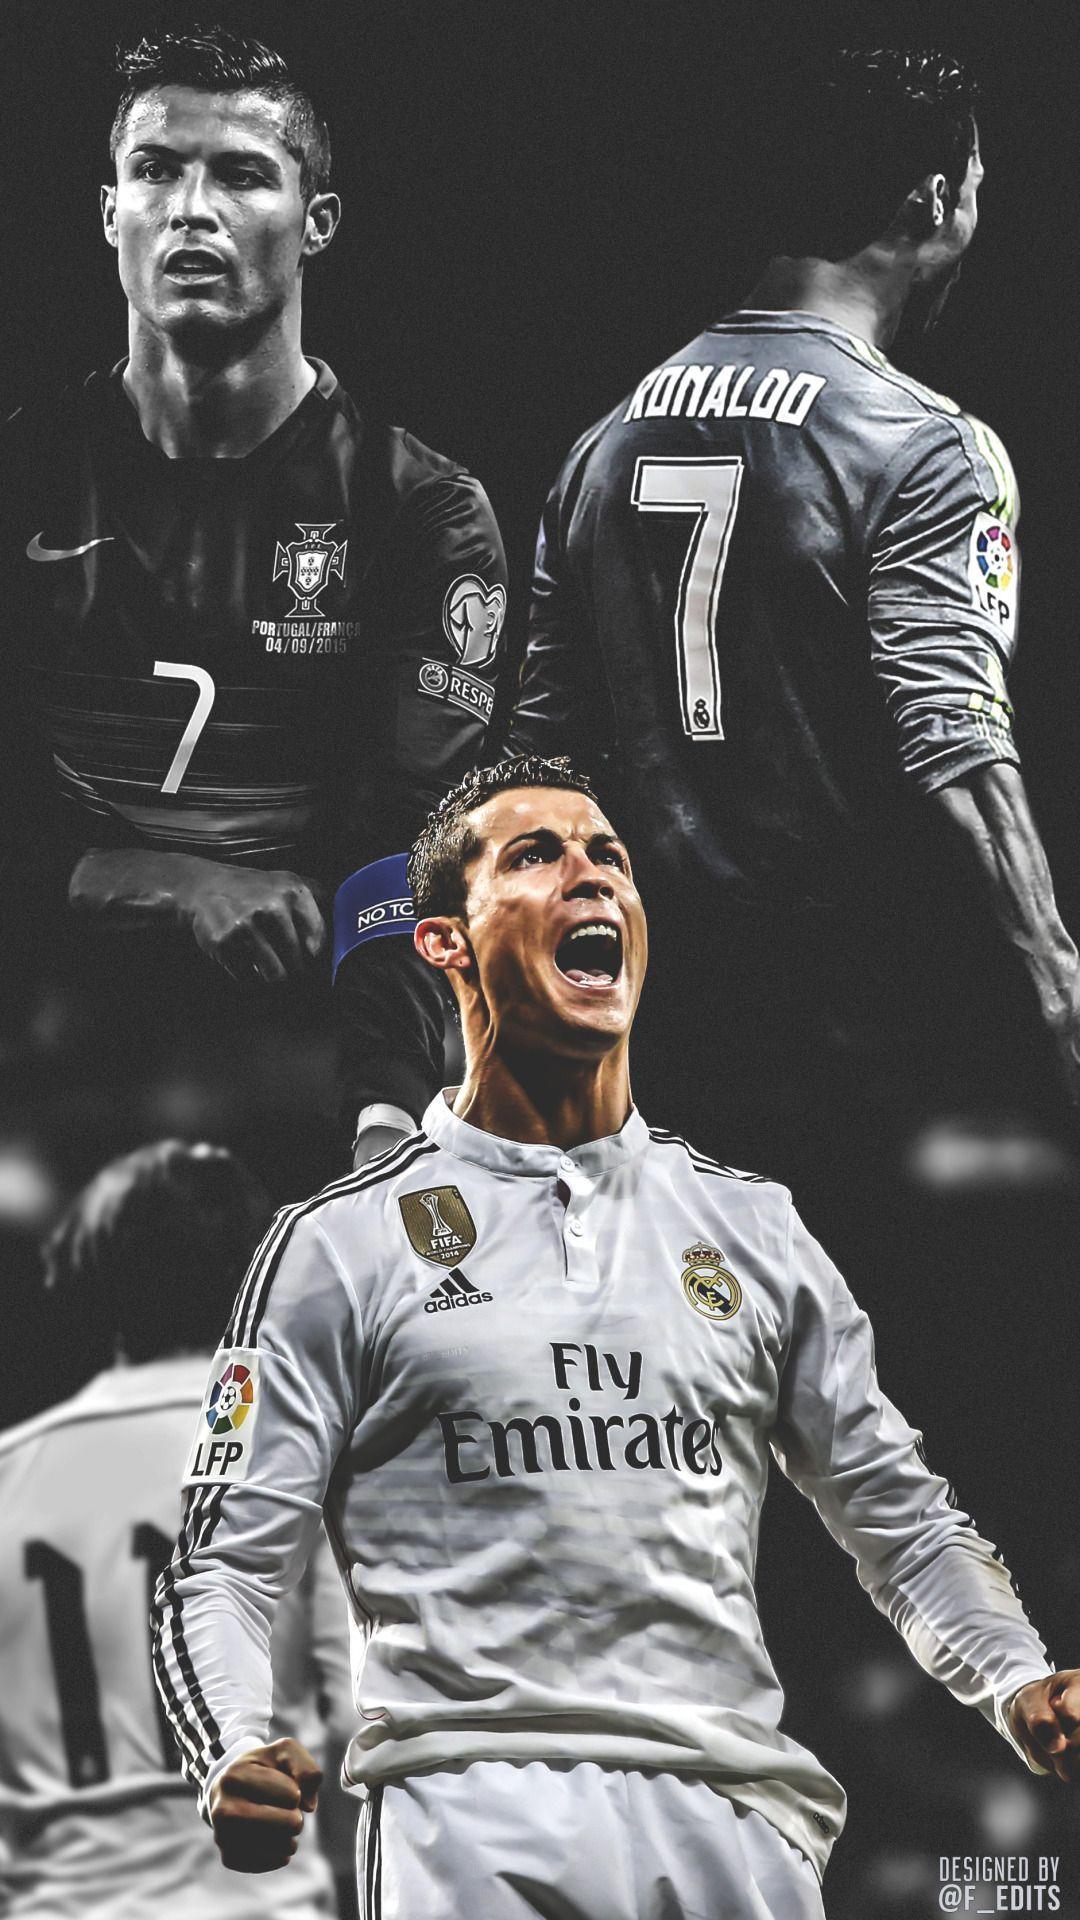 Cristiano Ronaldo wallpaper. Ronaldo wallpaper, Cristiano ronaldo wallpaper, Cristiano ronaldo cr7